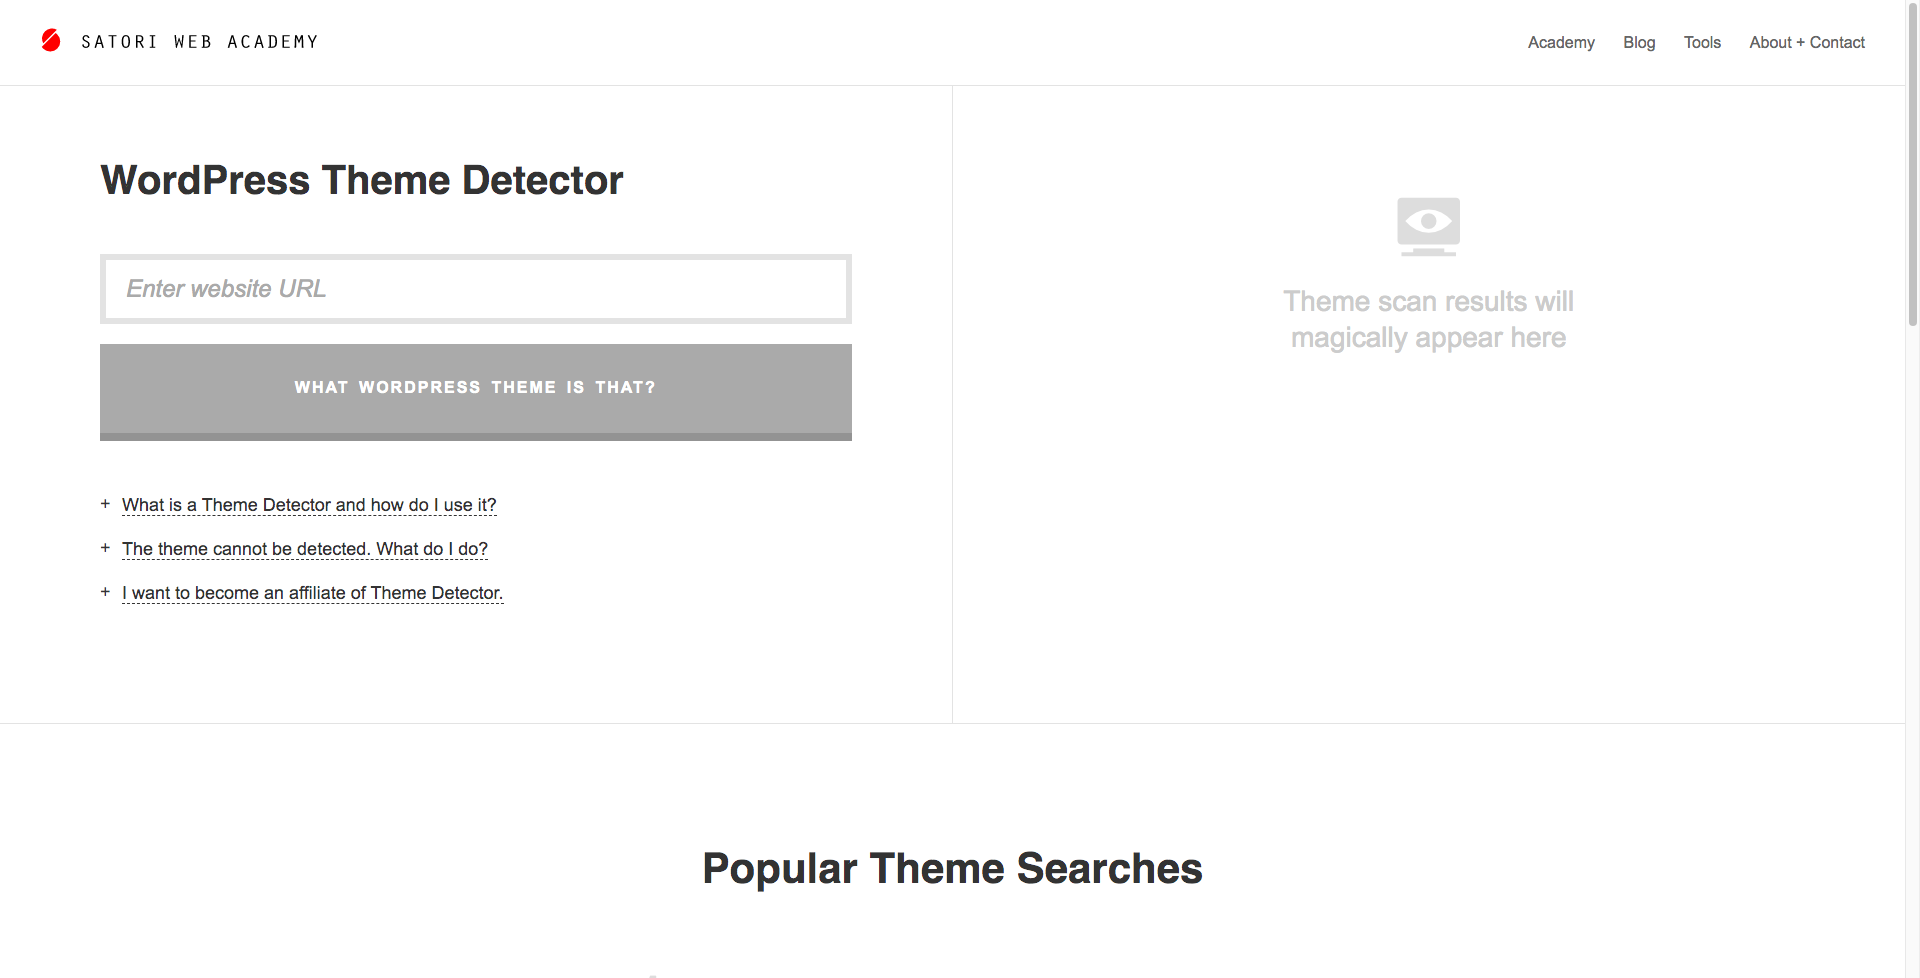 WordPress Theme Detector by Satori Studio